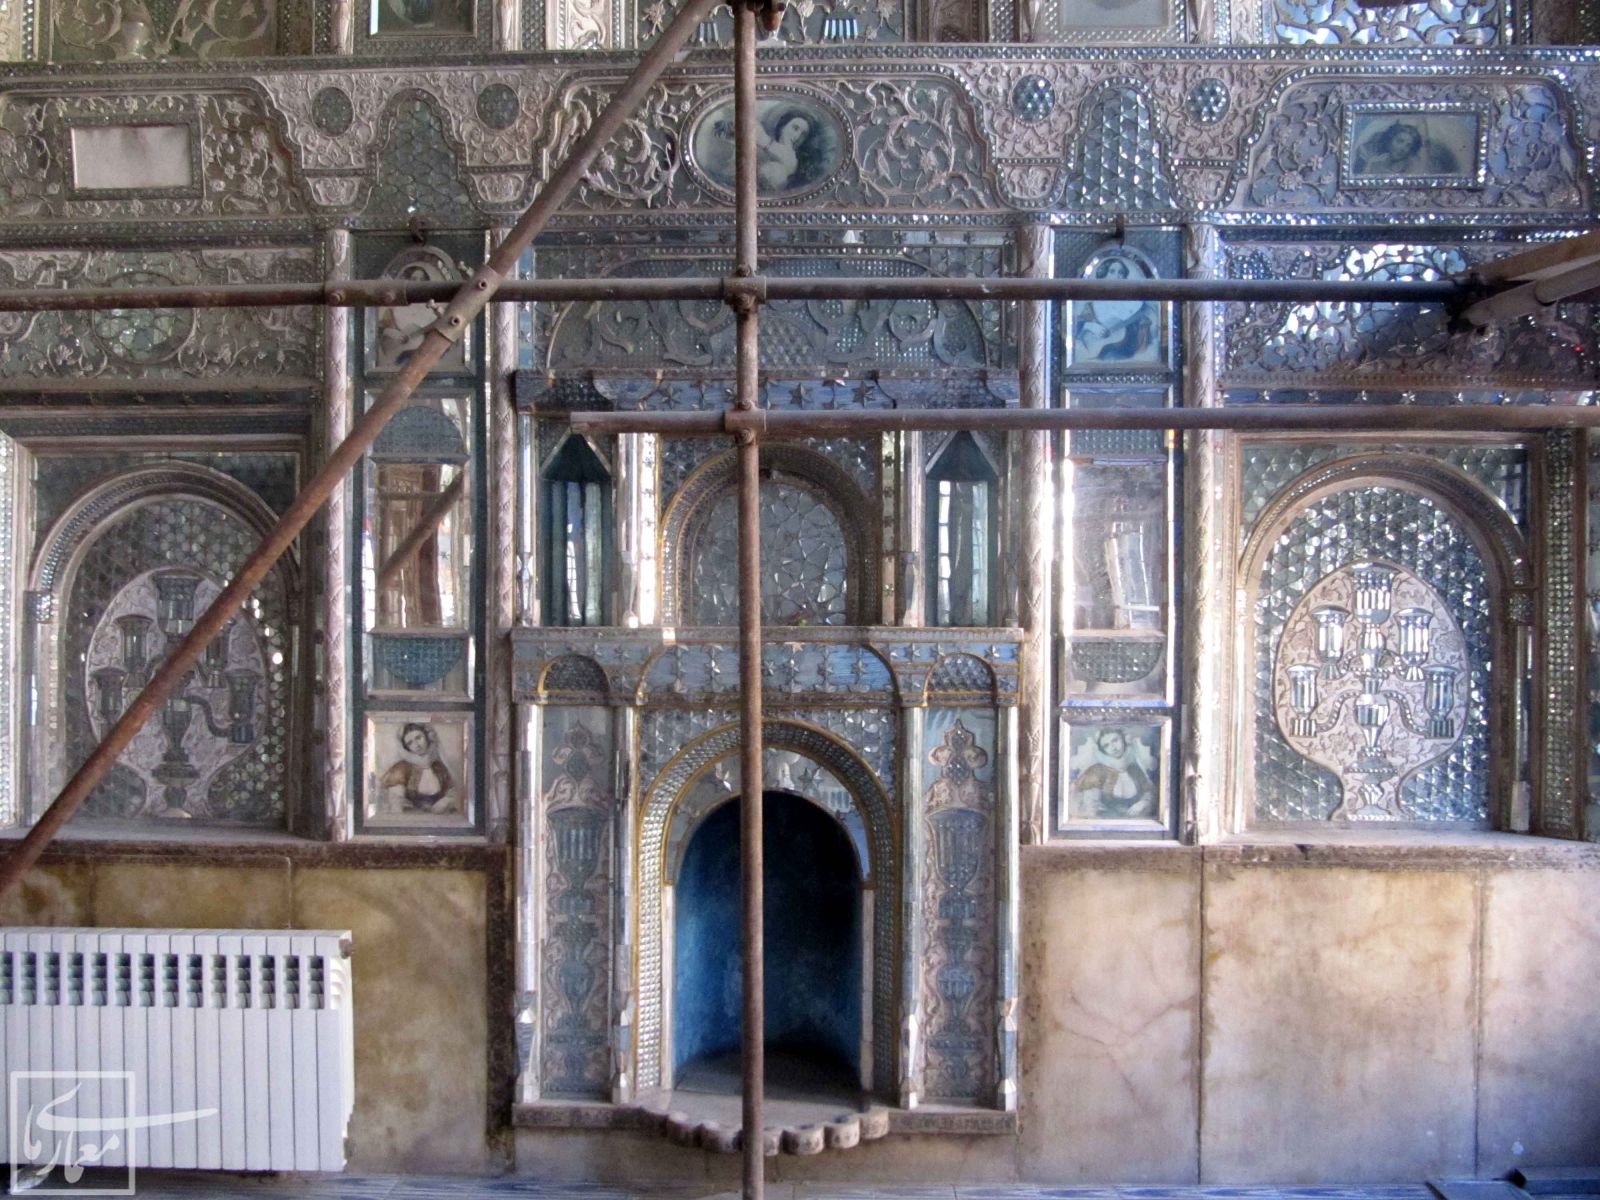 The house of Qavam od-Dawla (Vossug ed Dowleh)